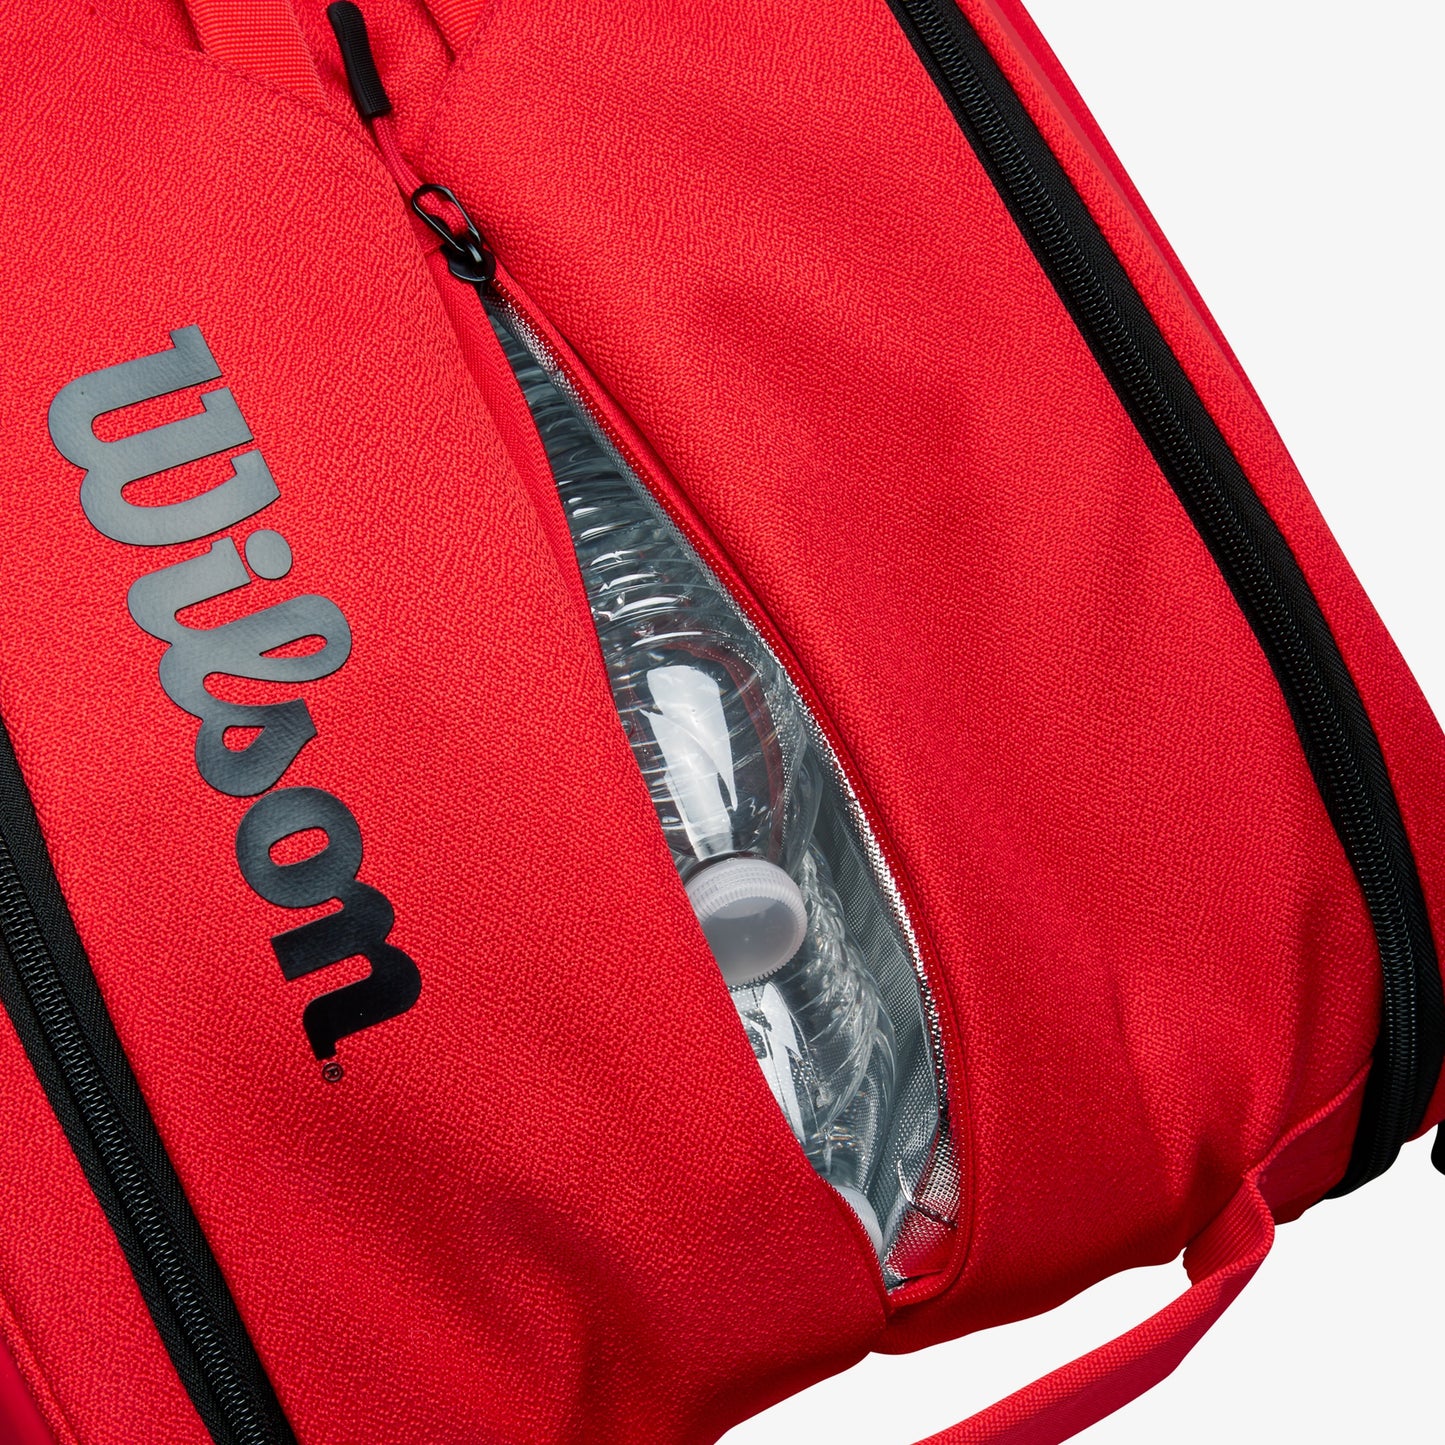 Wilson RF DNA Premium 12 pack bag - Red